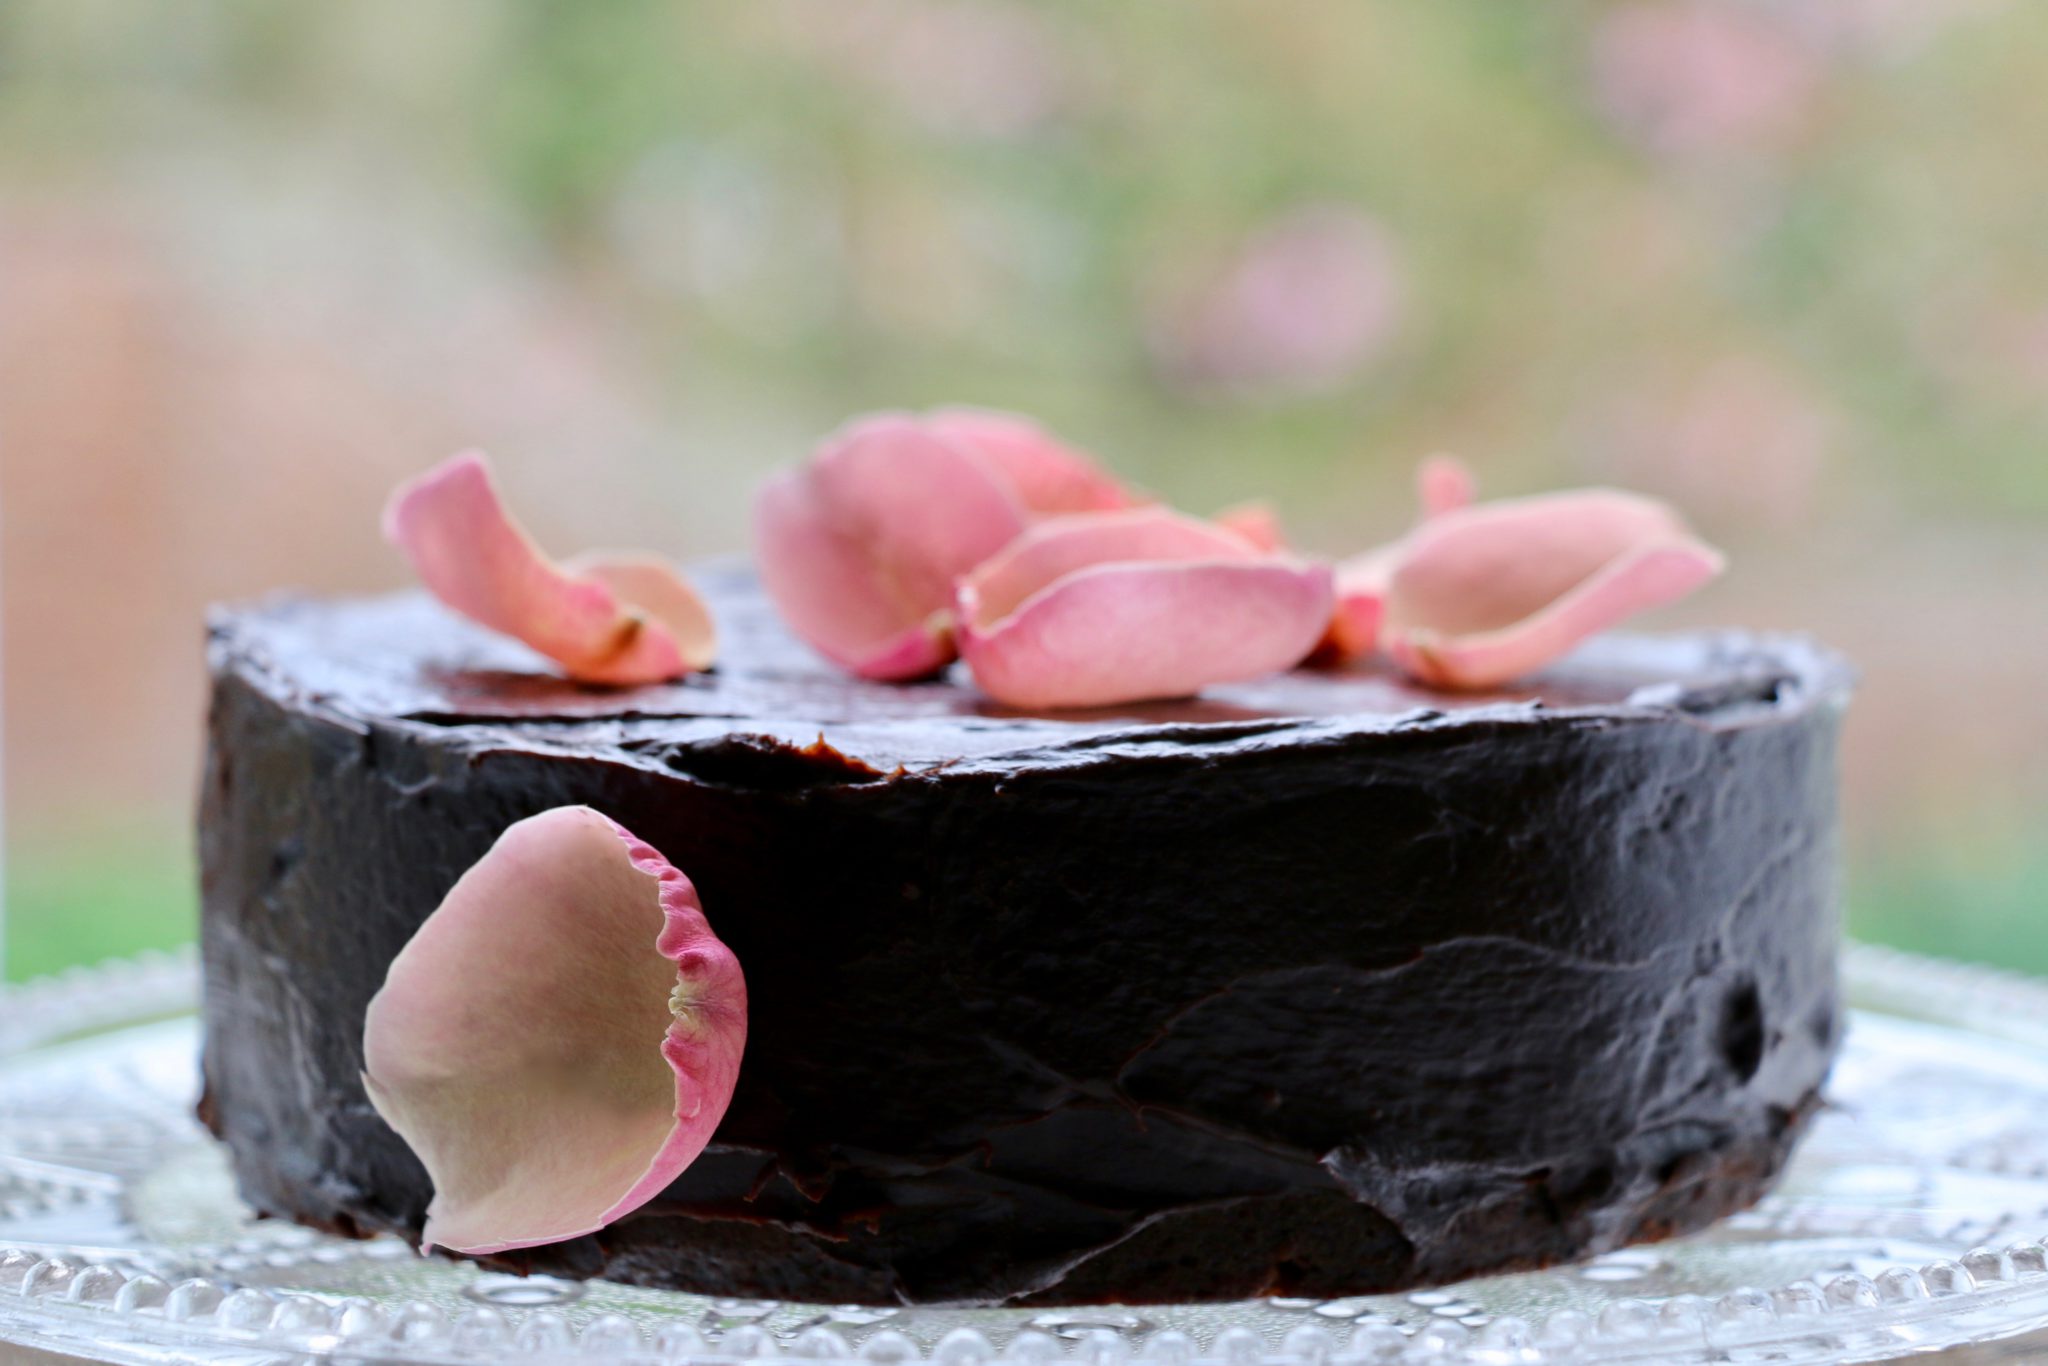 Edible flower cake with sweet geranium, blackcurrant & vanilla